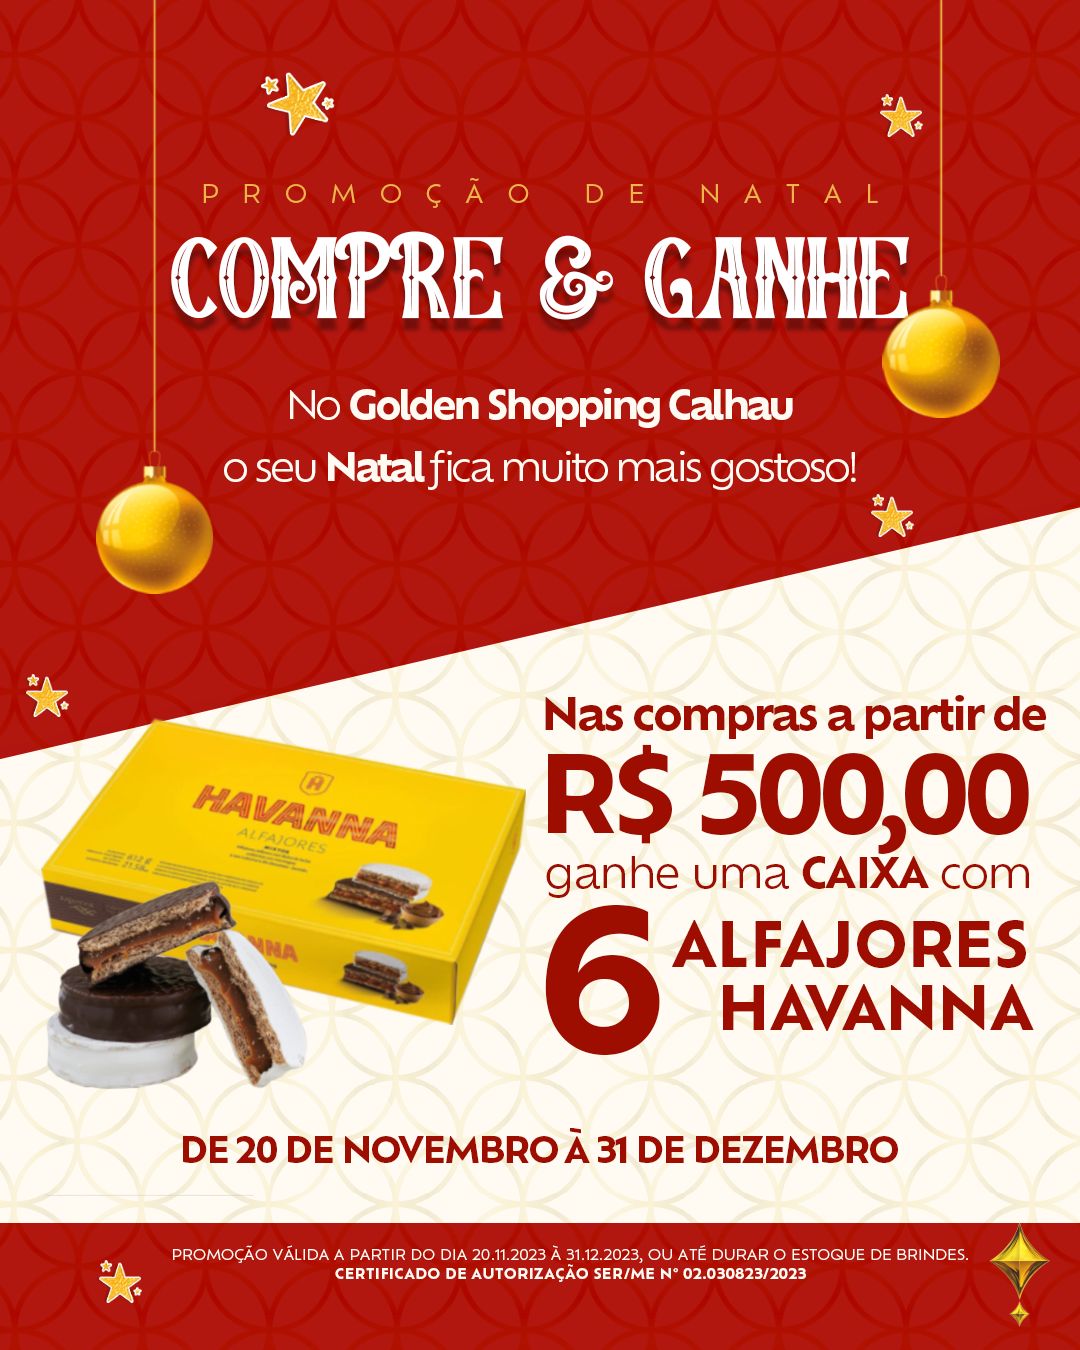 Golden Shopping inicia a sua campanha de Natal - O Informante